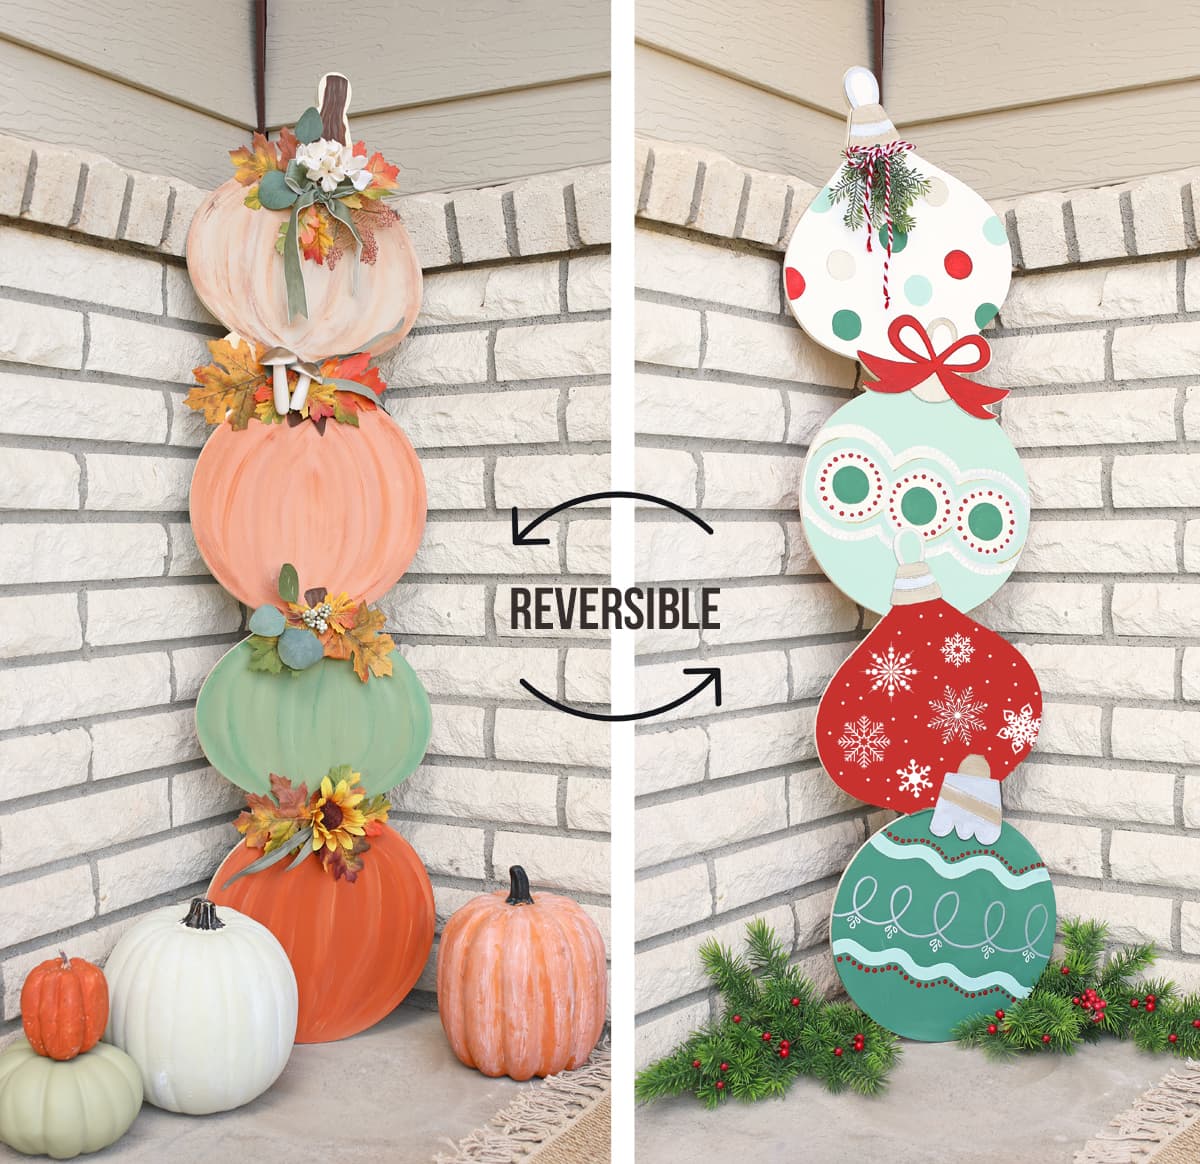 Reversible Pumpkins and Ornaments Holiday Decoration